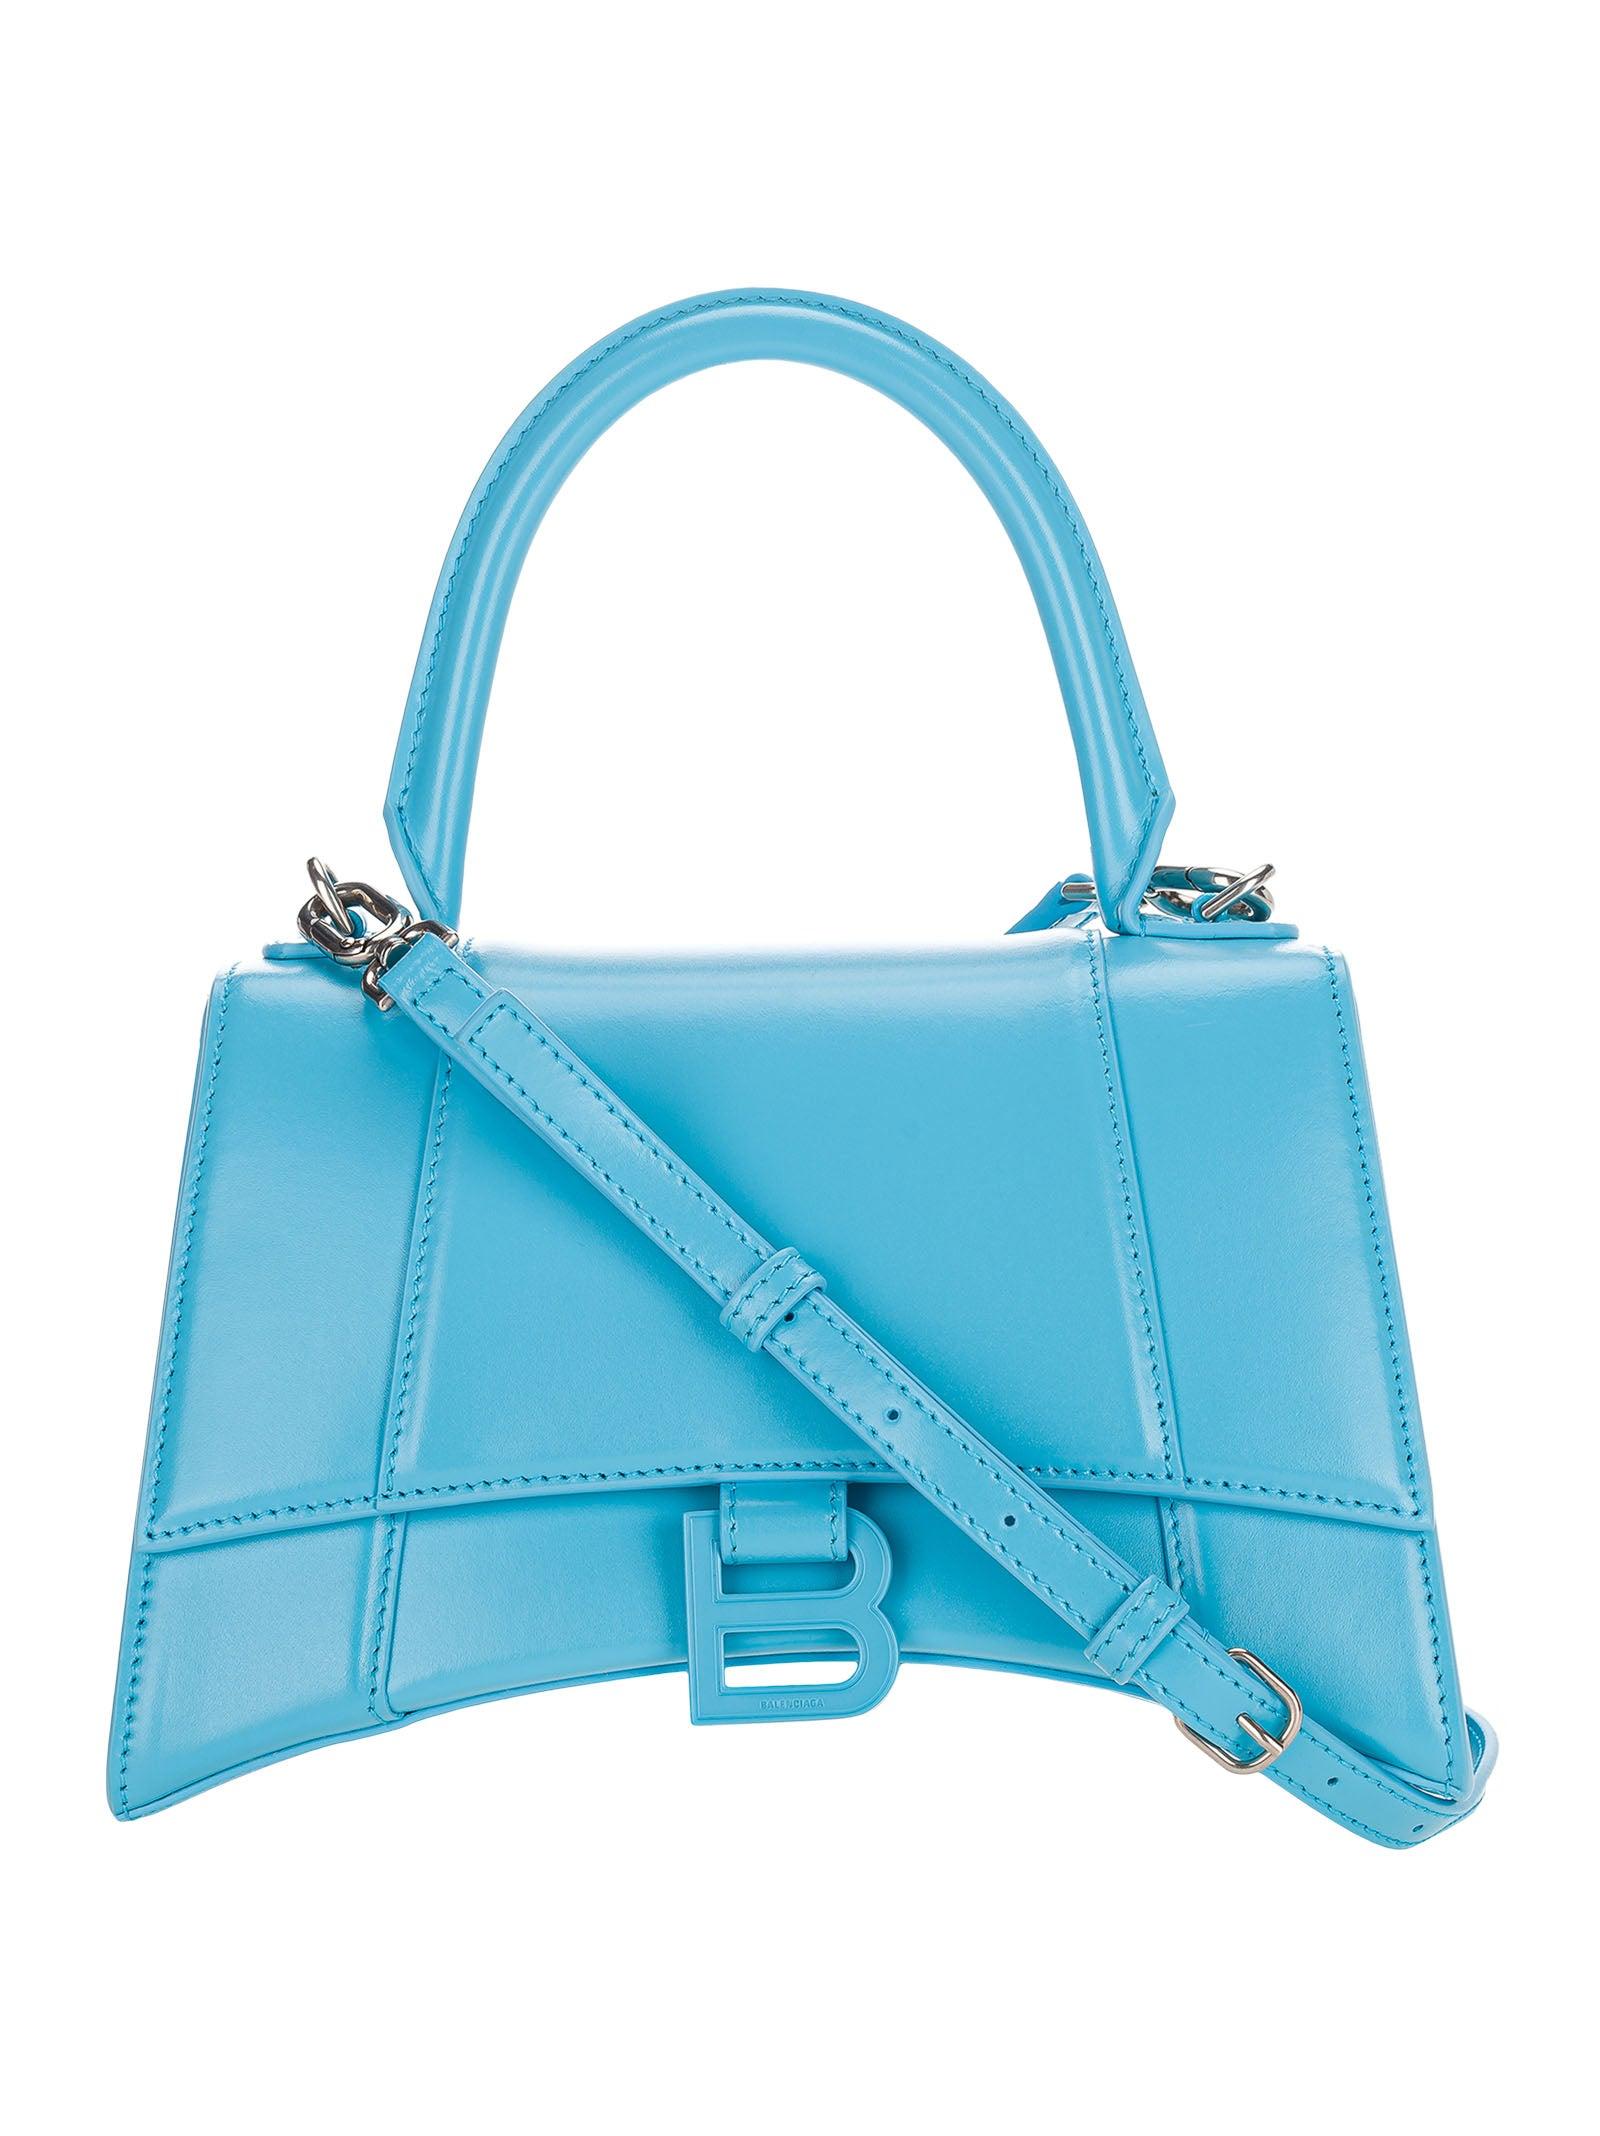 Balenciaga Hourglass Small Top Handle Bag in Blue | Lyst Canada